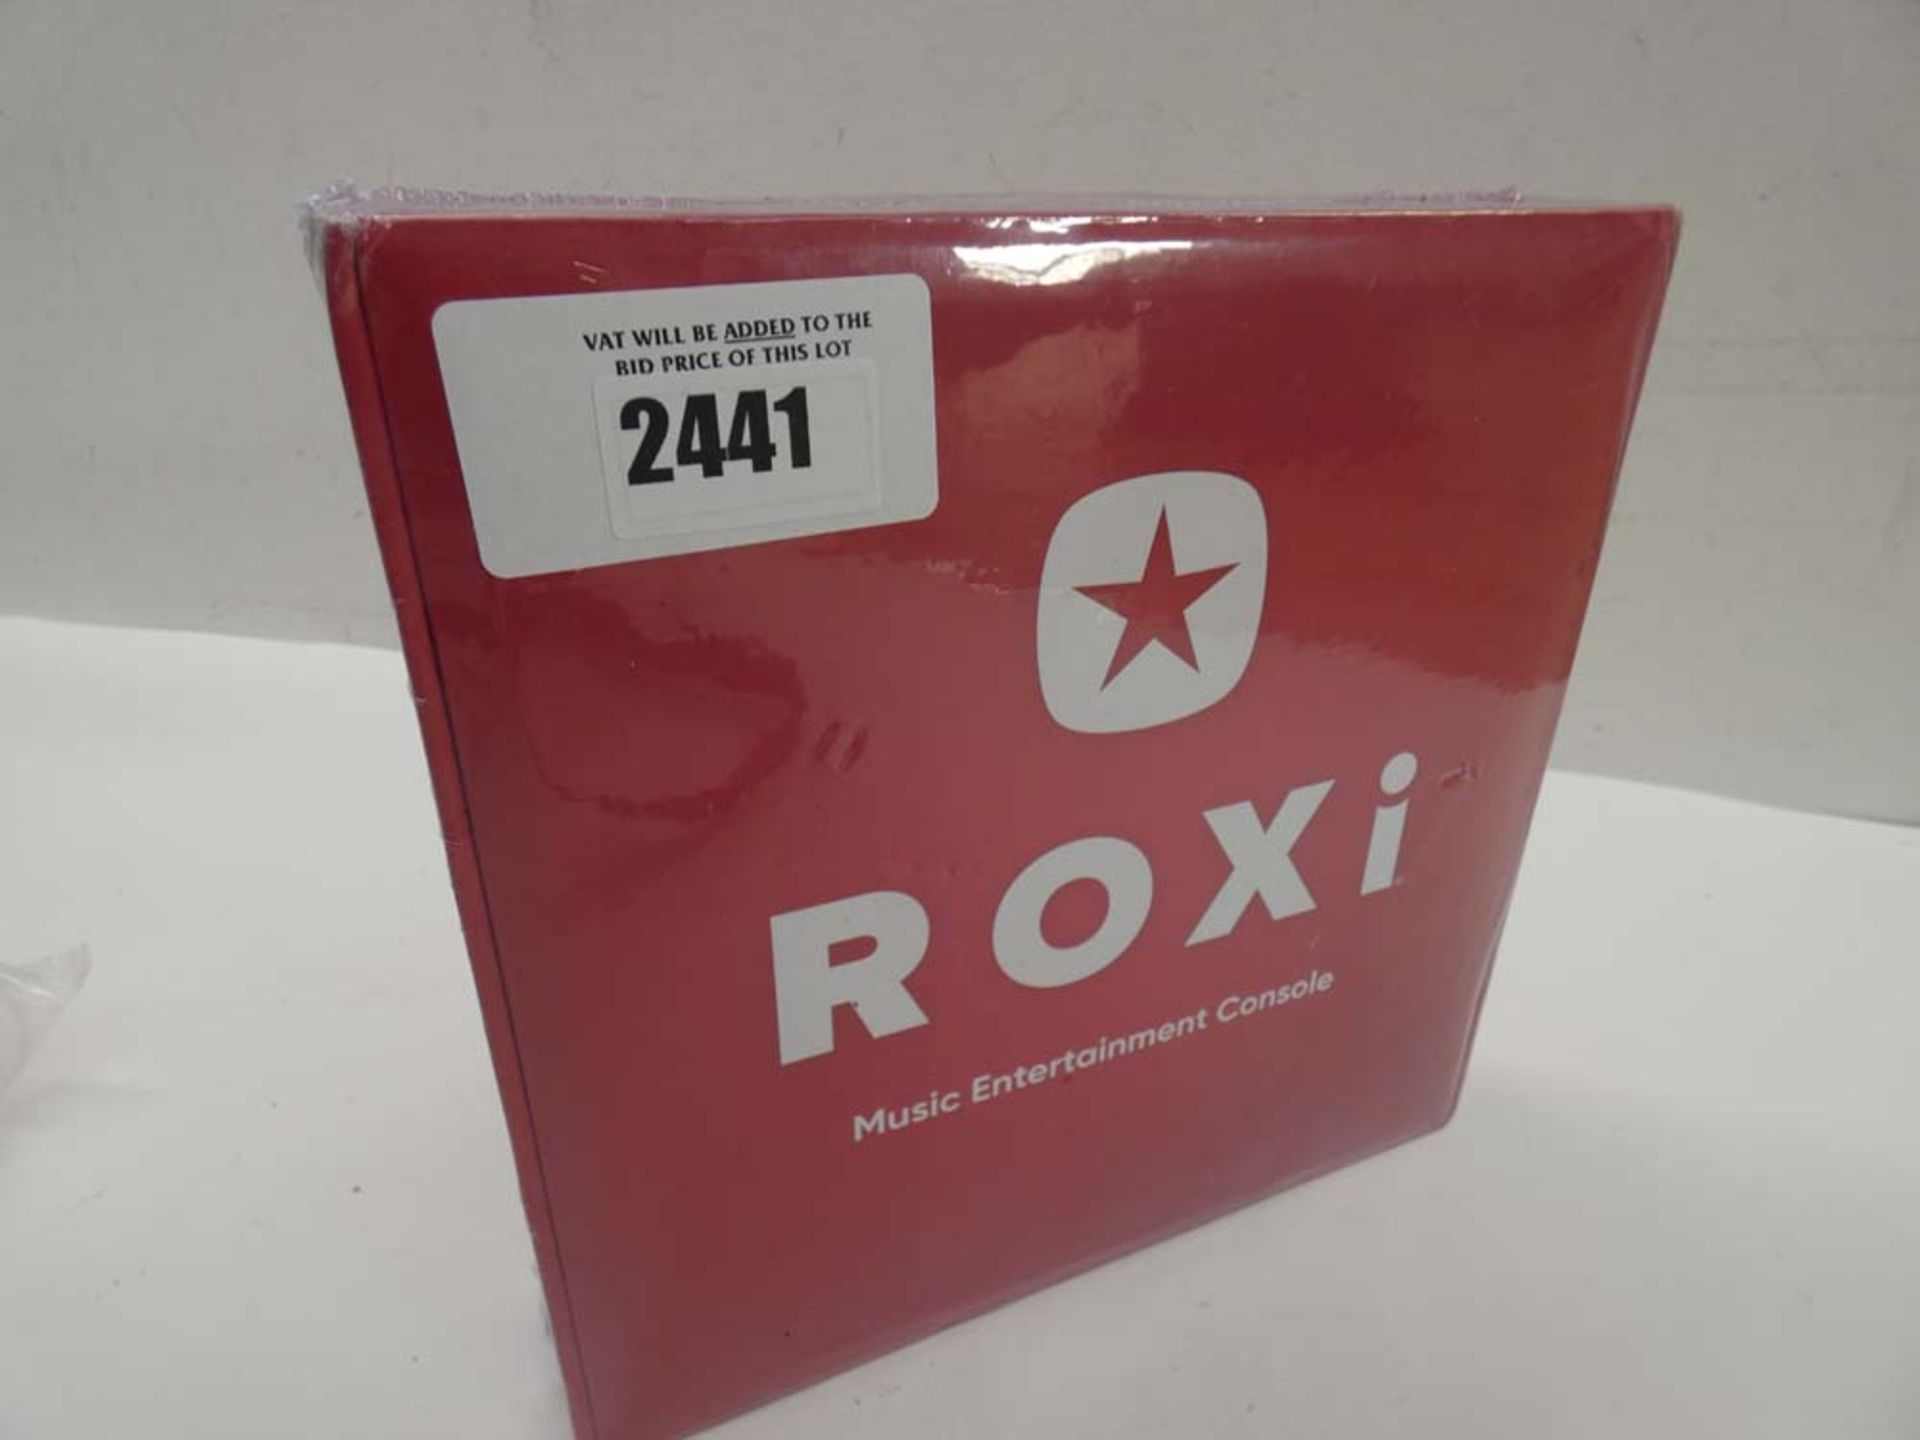 Roxi music entertainment console